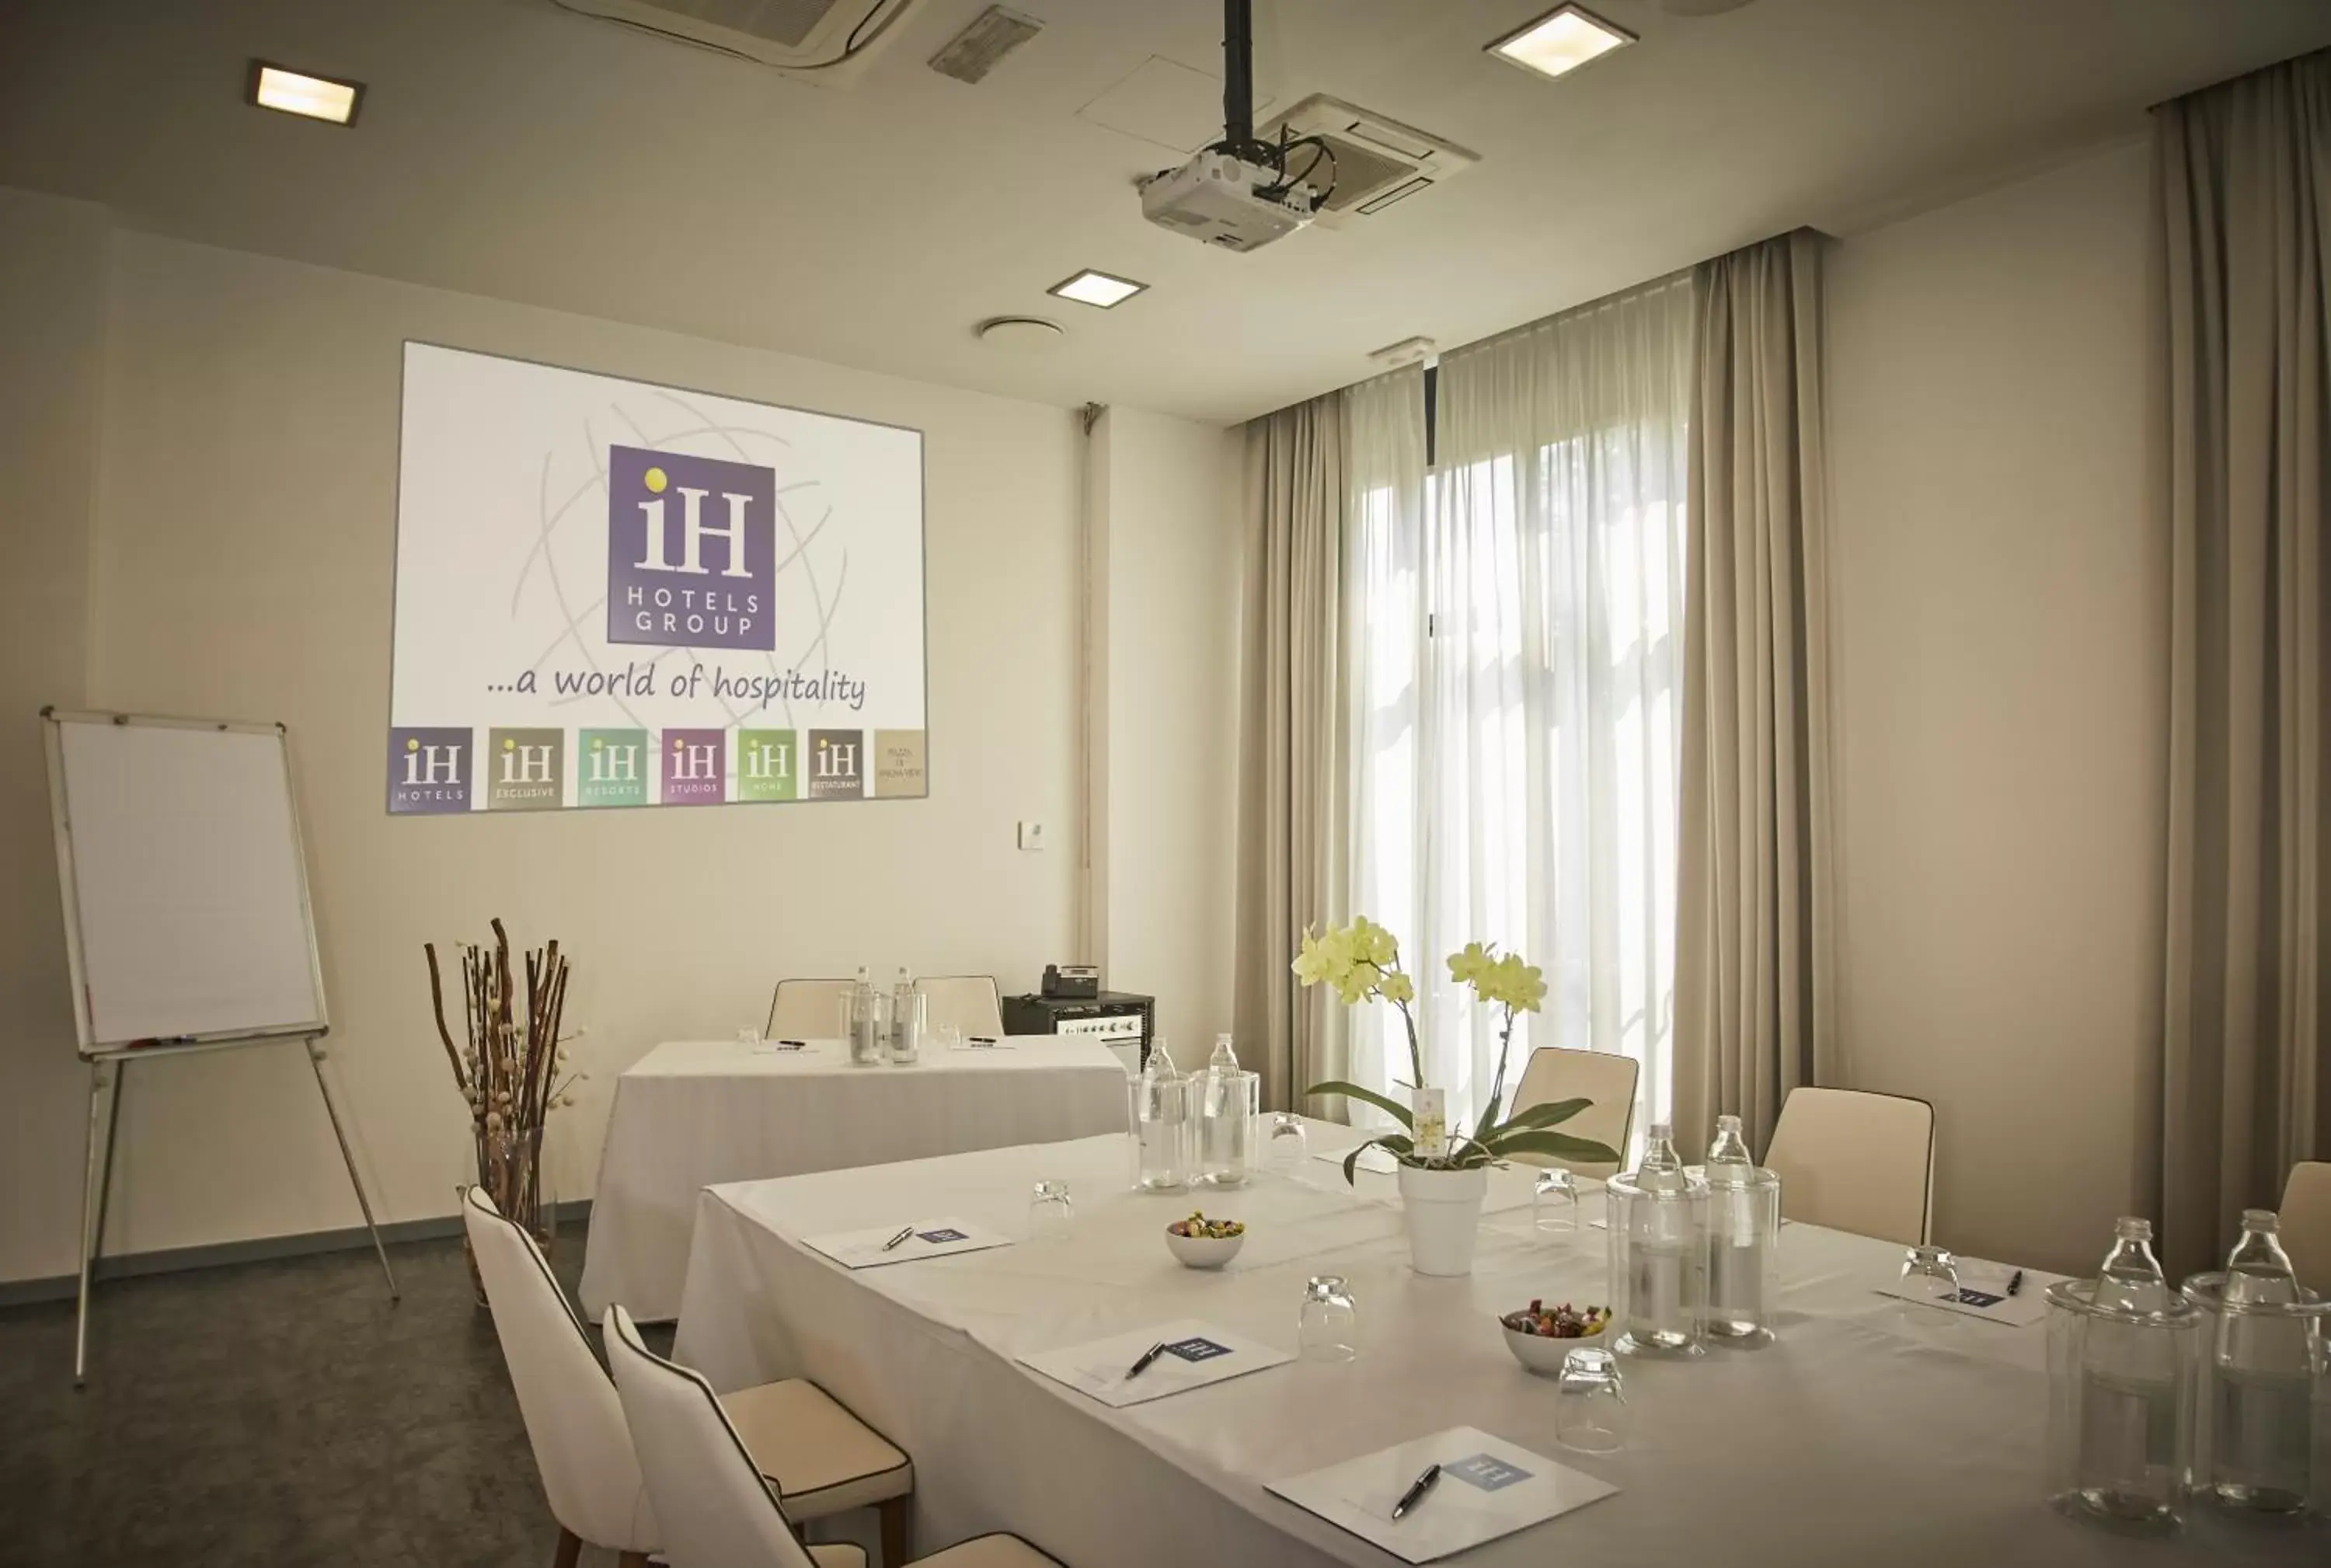 Meeting/conference room in iH Hotels Milano Lorenteggio